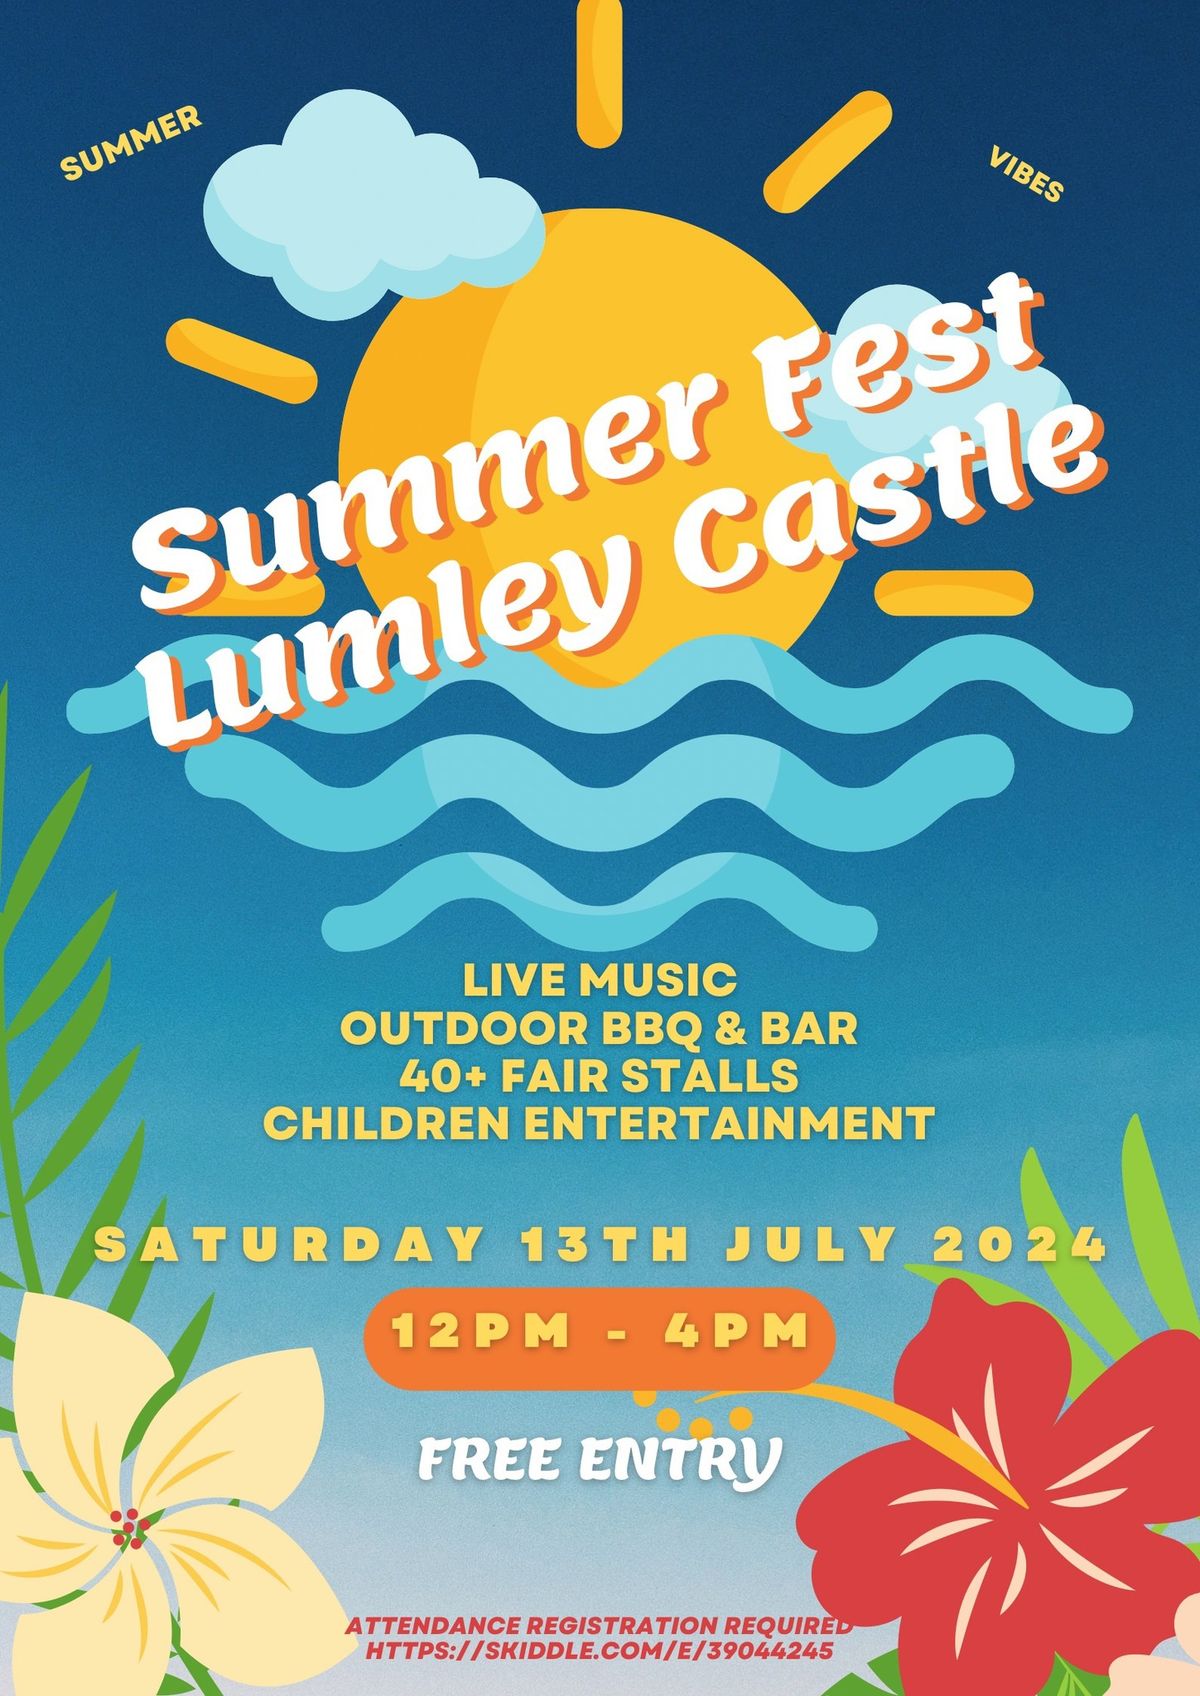 Summer Fest at Lumley Castle